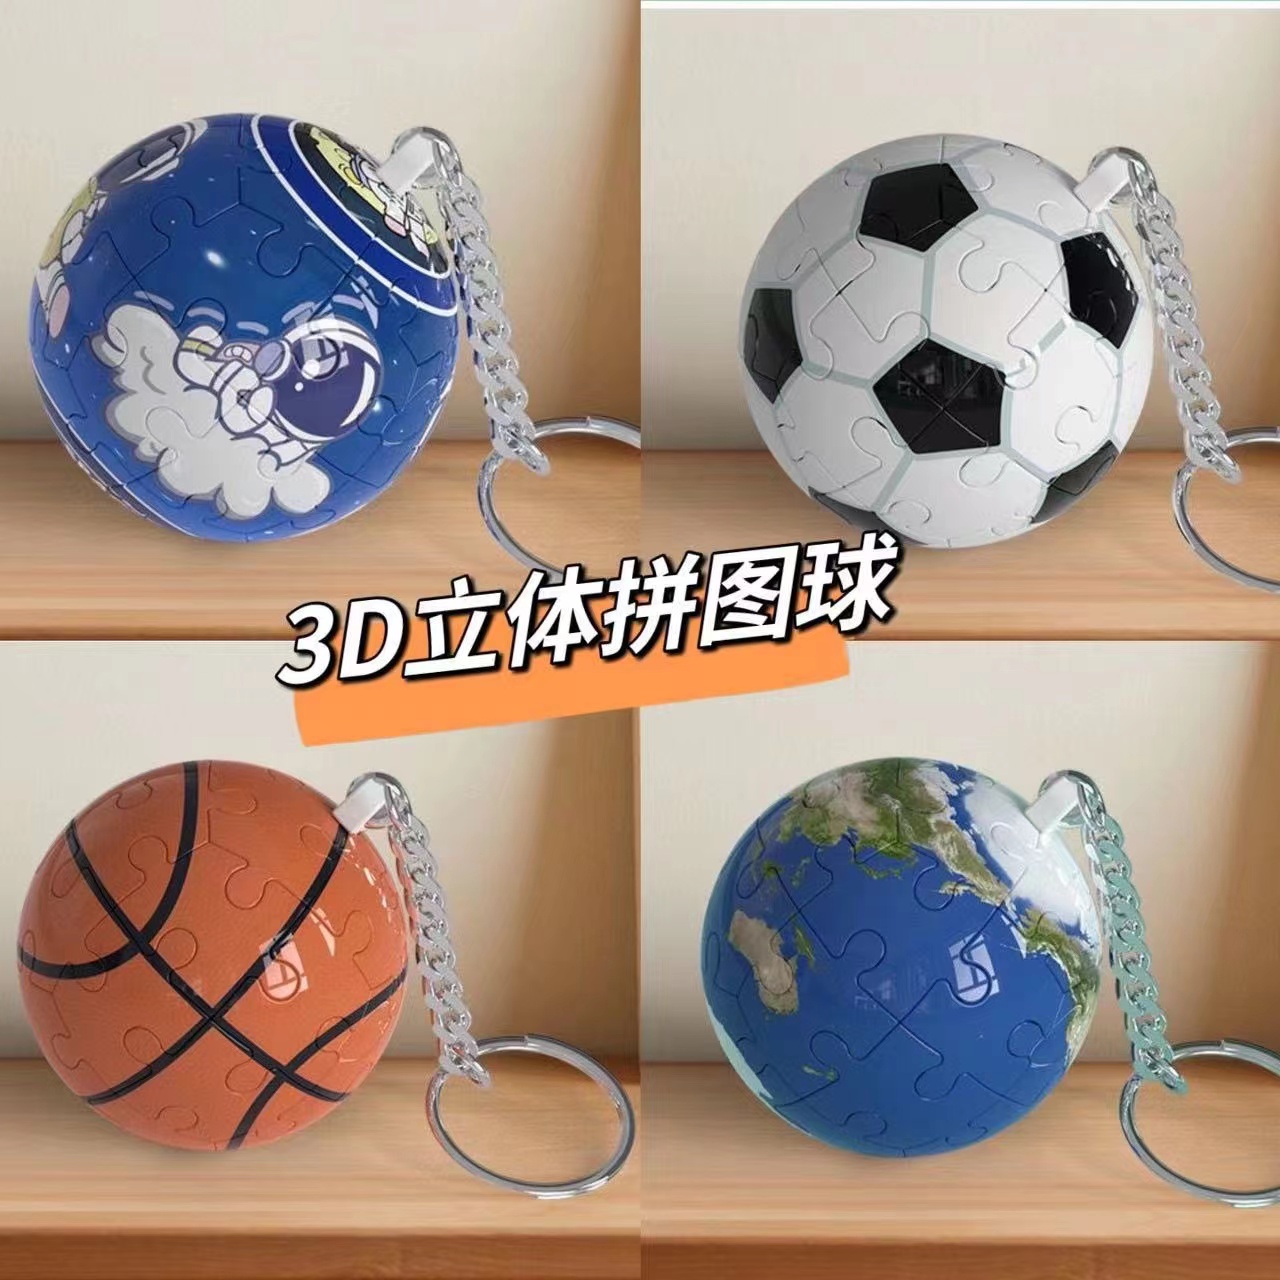 3D立体拼图球体趣味拼接拼装圣诞足球篮球钥匙扣链挂件创意小礼品